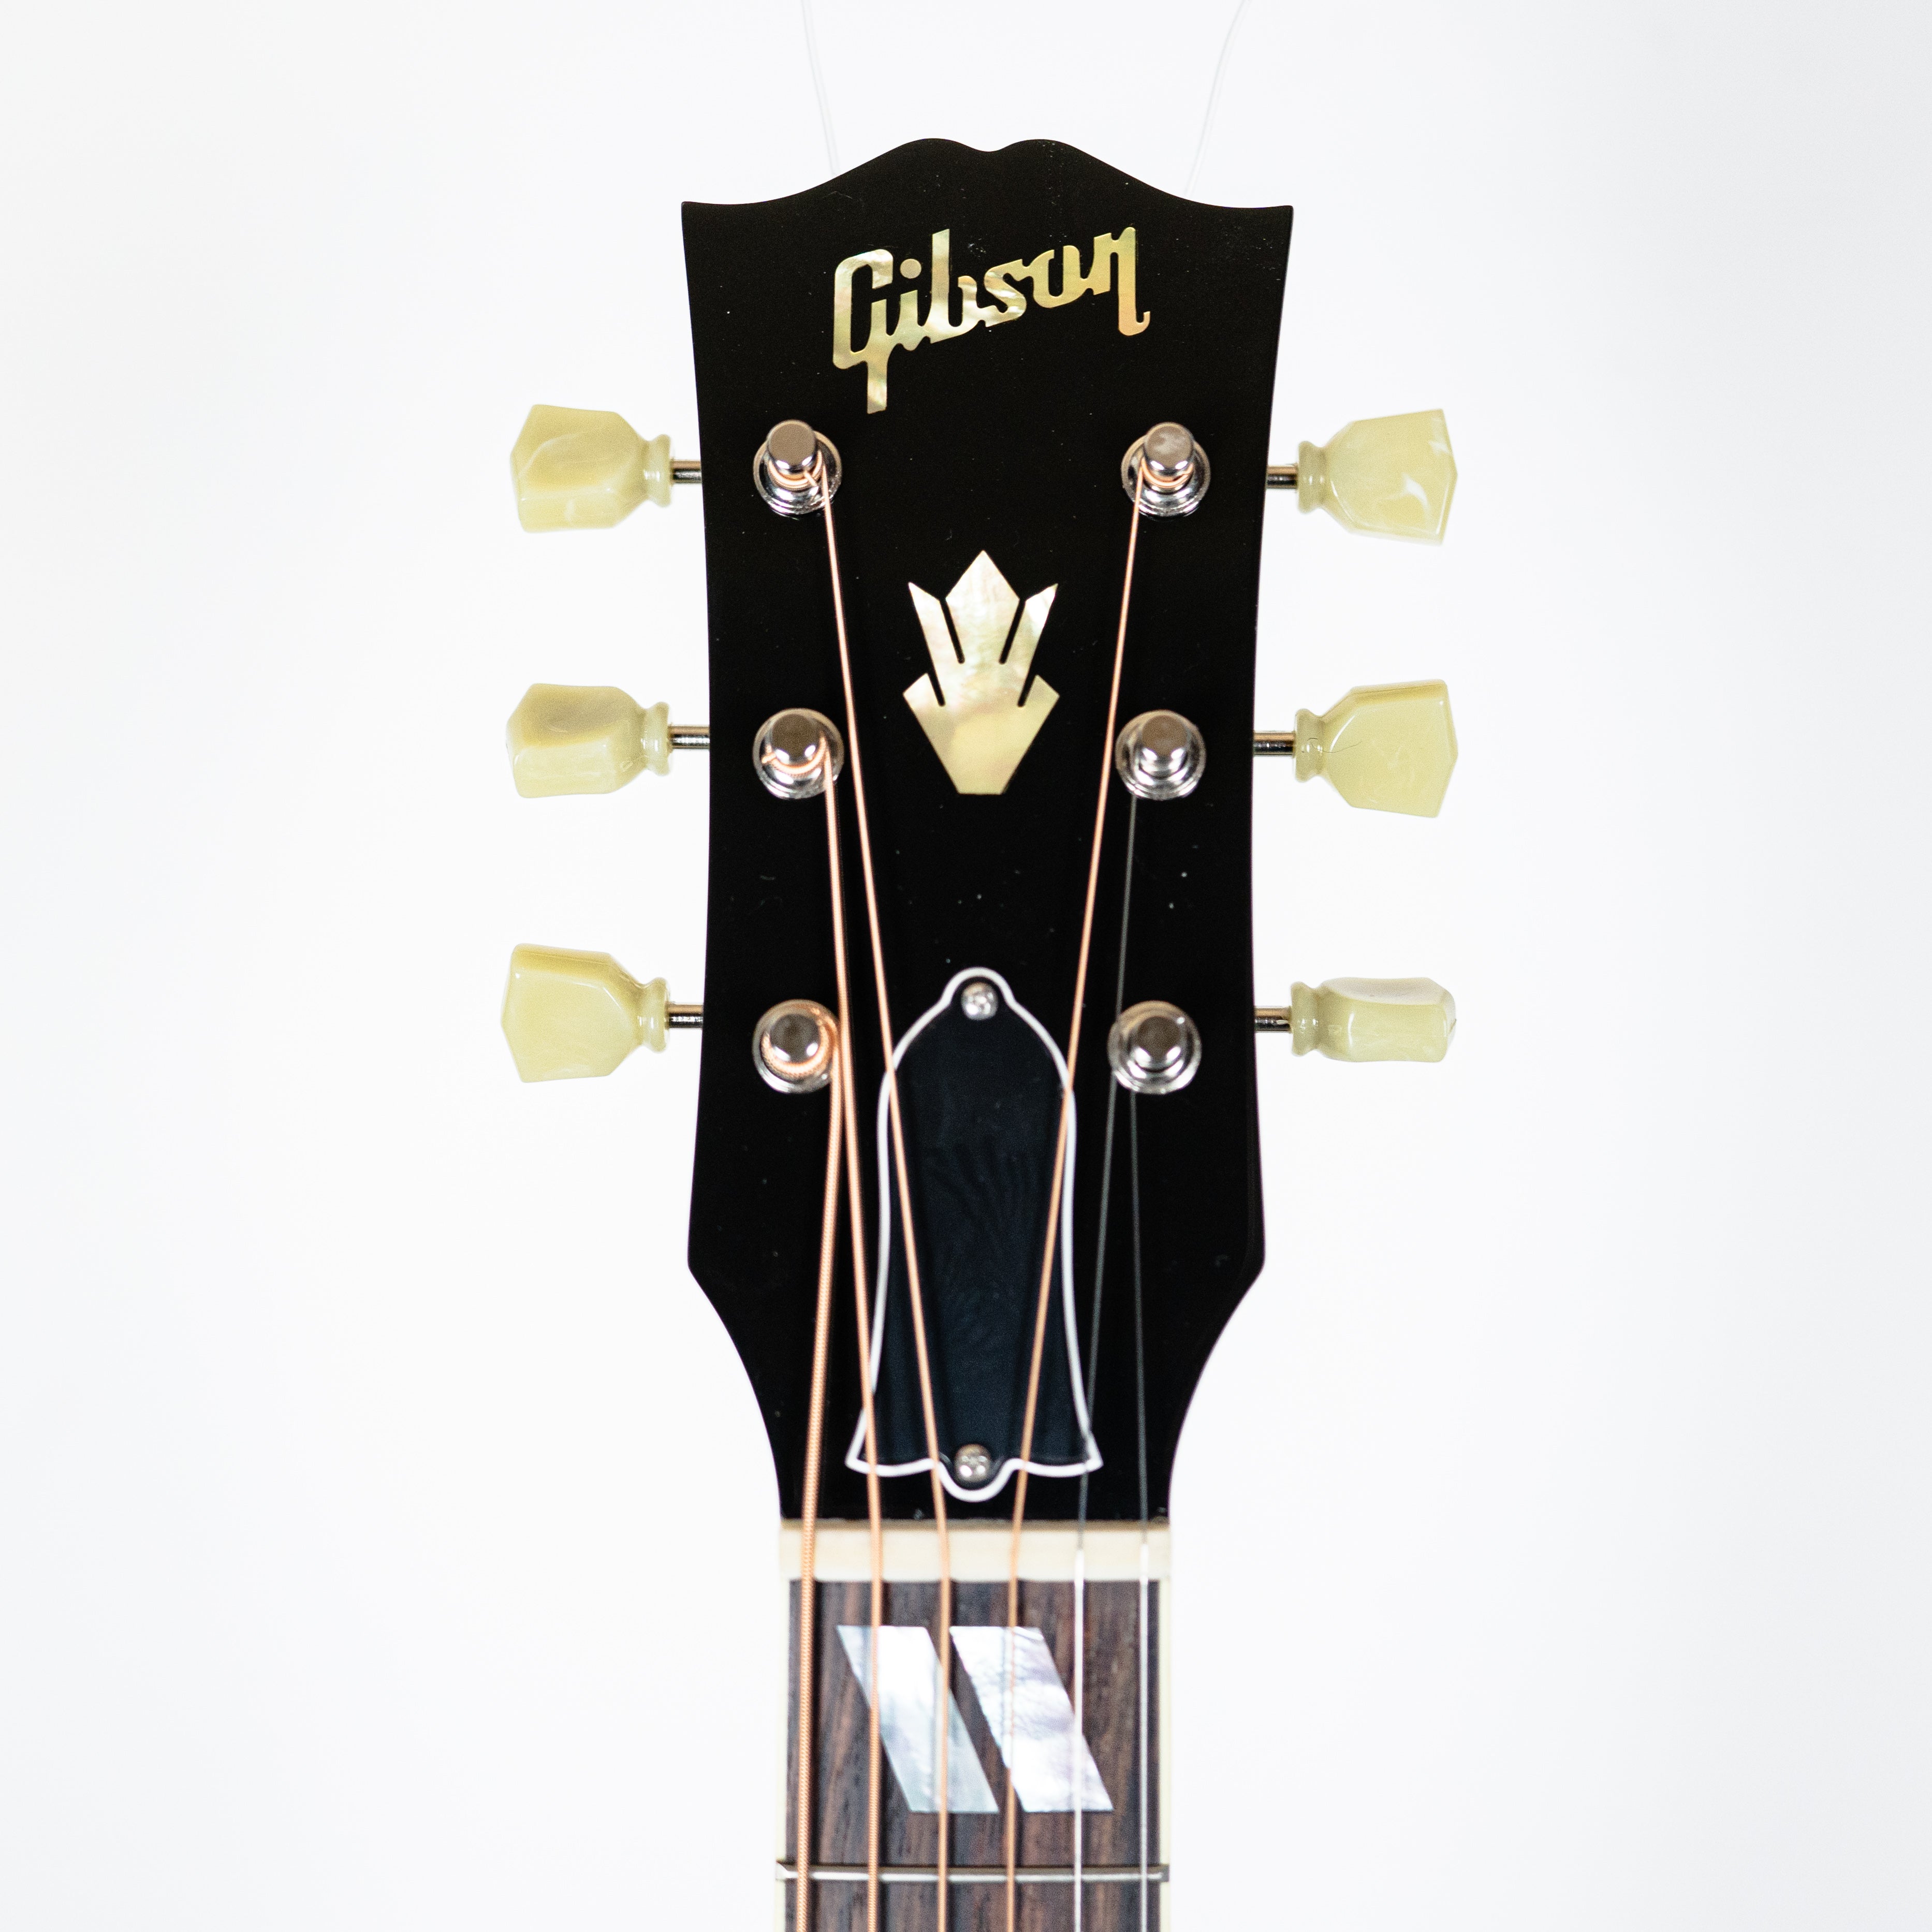 Gibson J-185 Original Vintage Sunburst